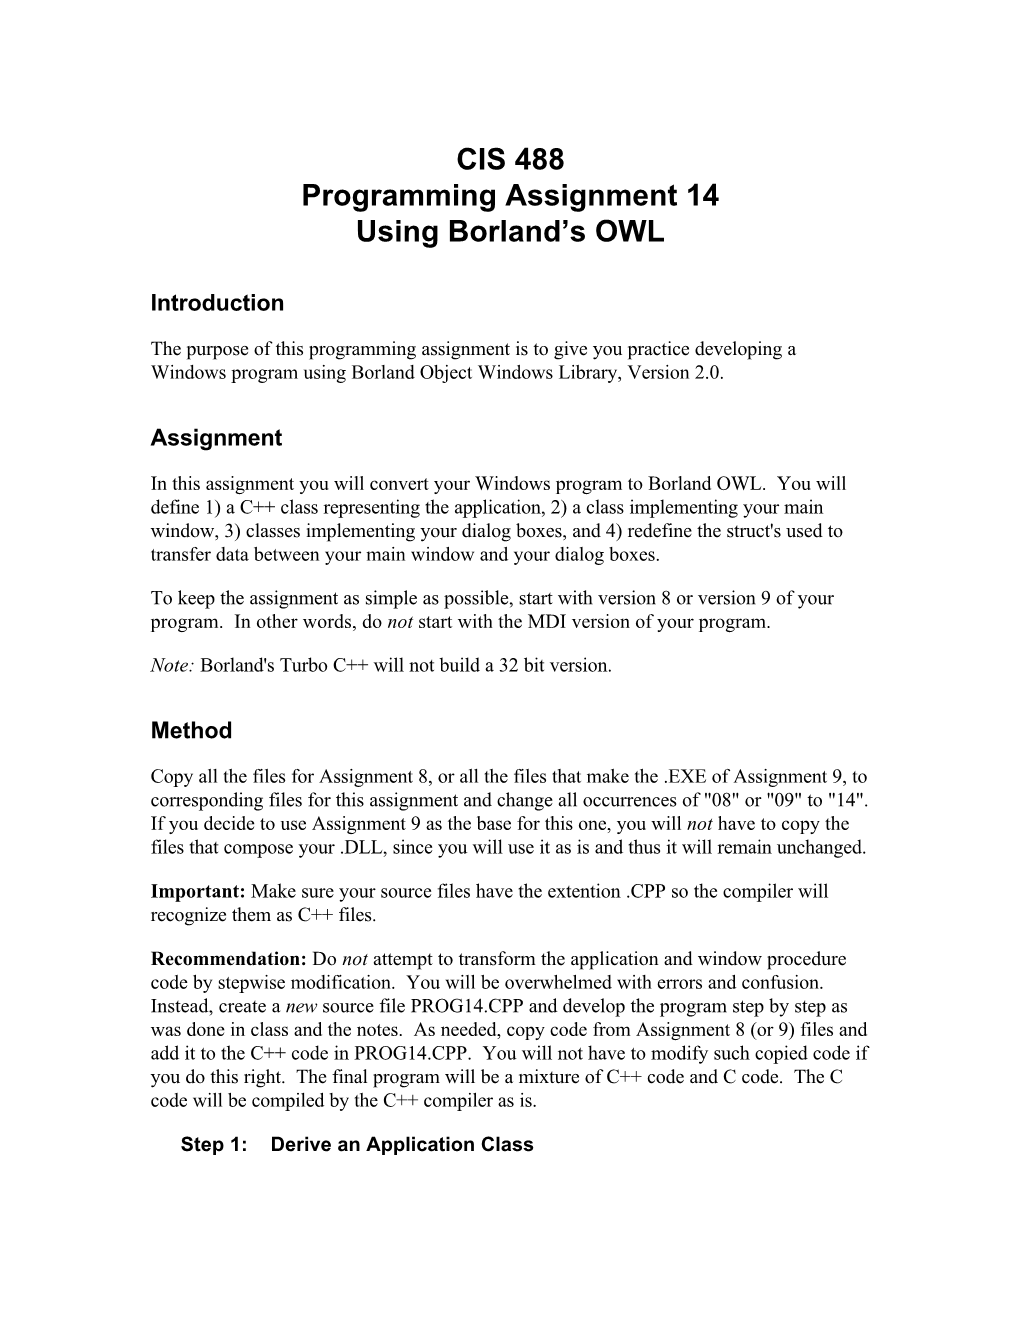 CIS 488 Programming Assignment 14 Using Borland's